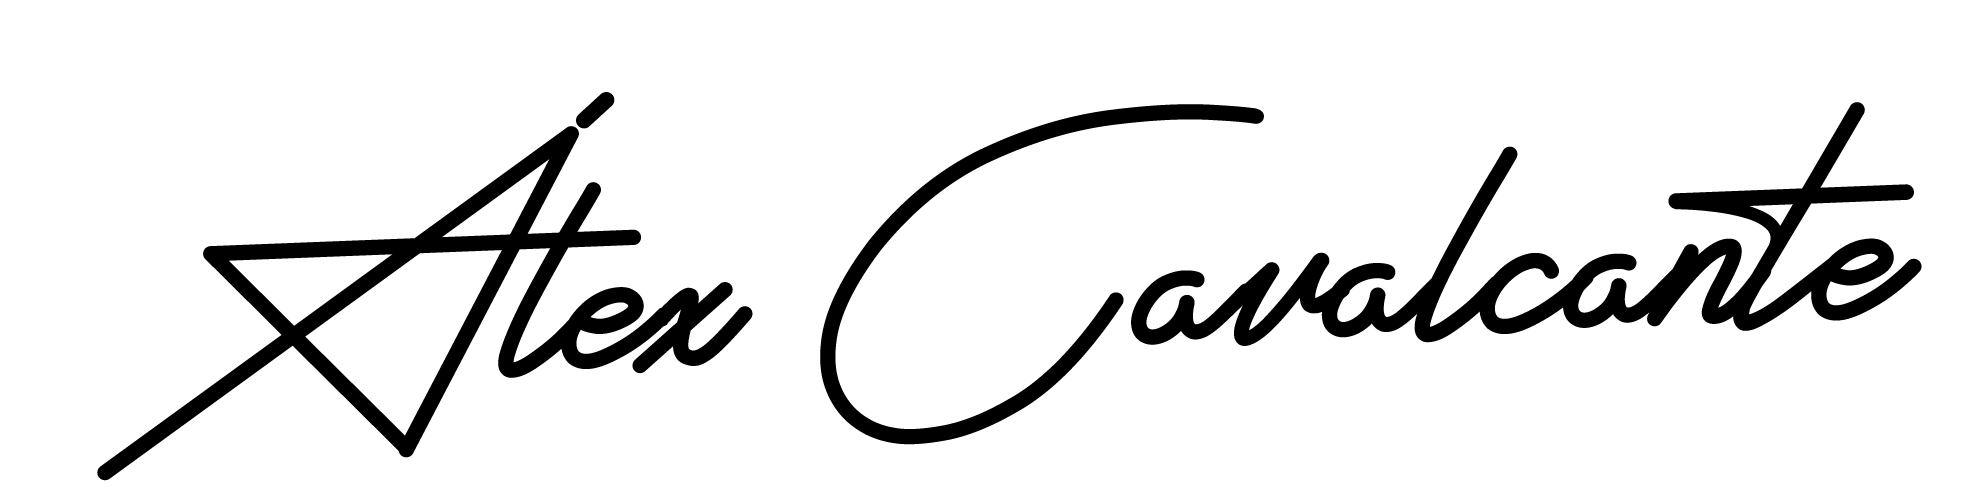 Álex Cavalcante Logo